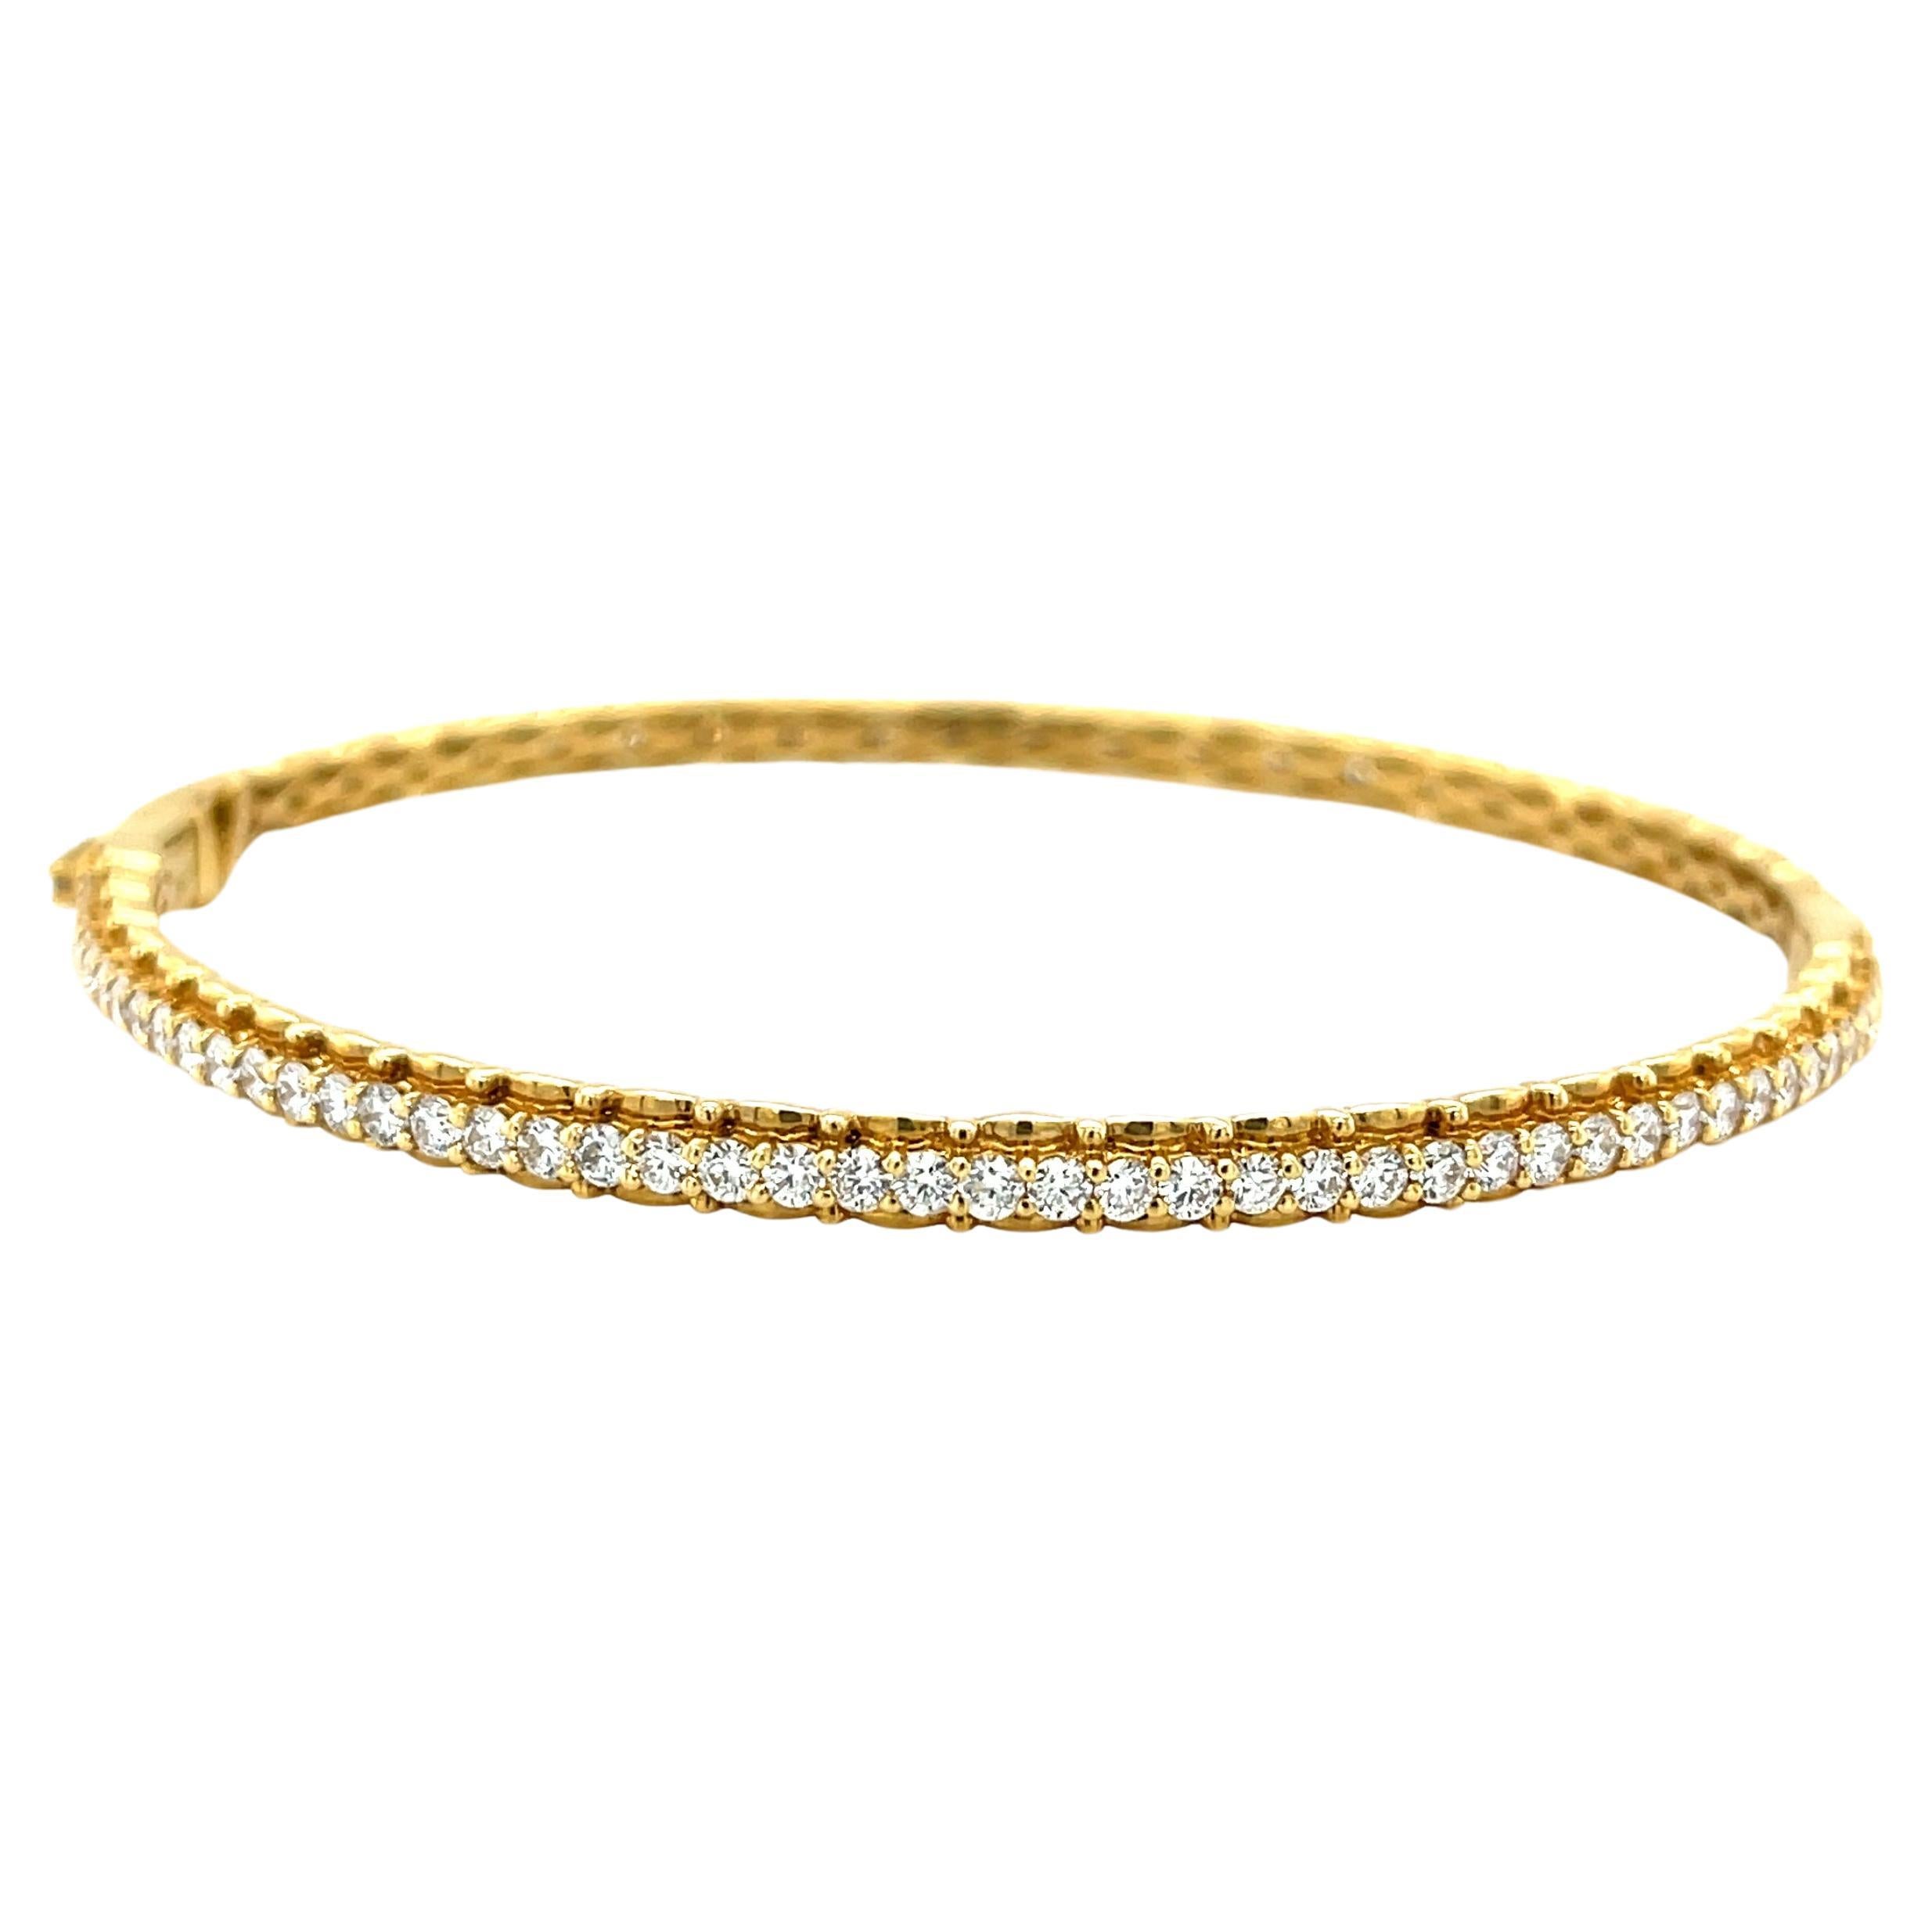 Diamond and Yellow Gold Circle Bangle Bracelet, 2.63 Carats Total